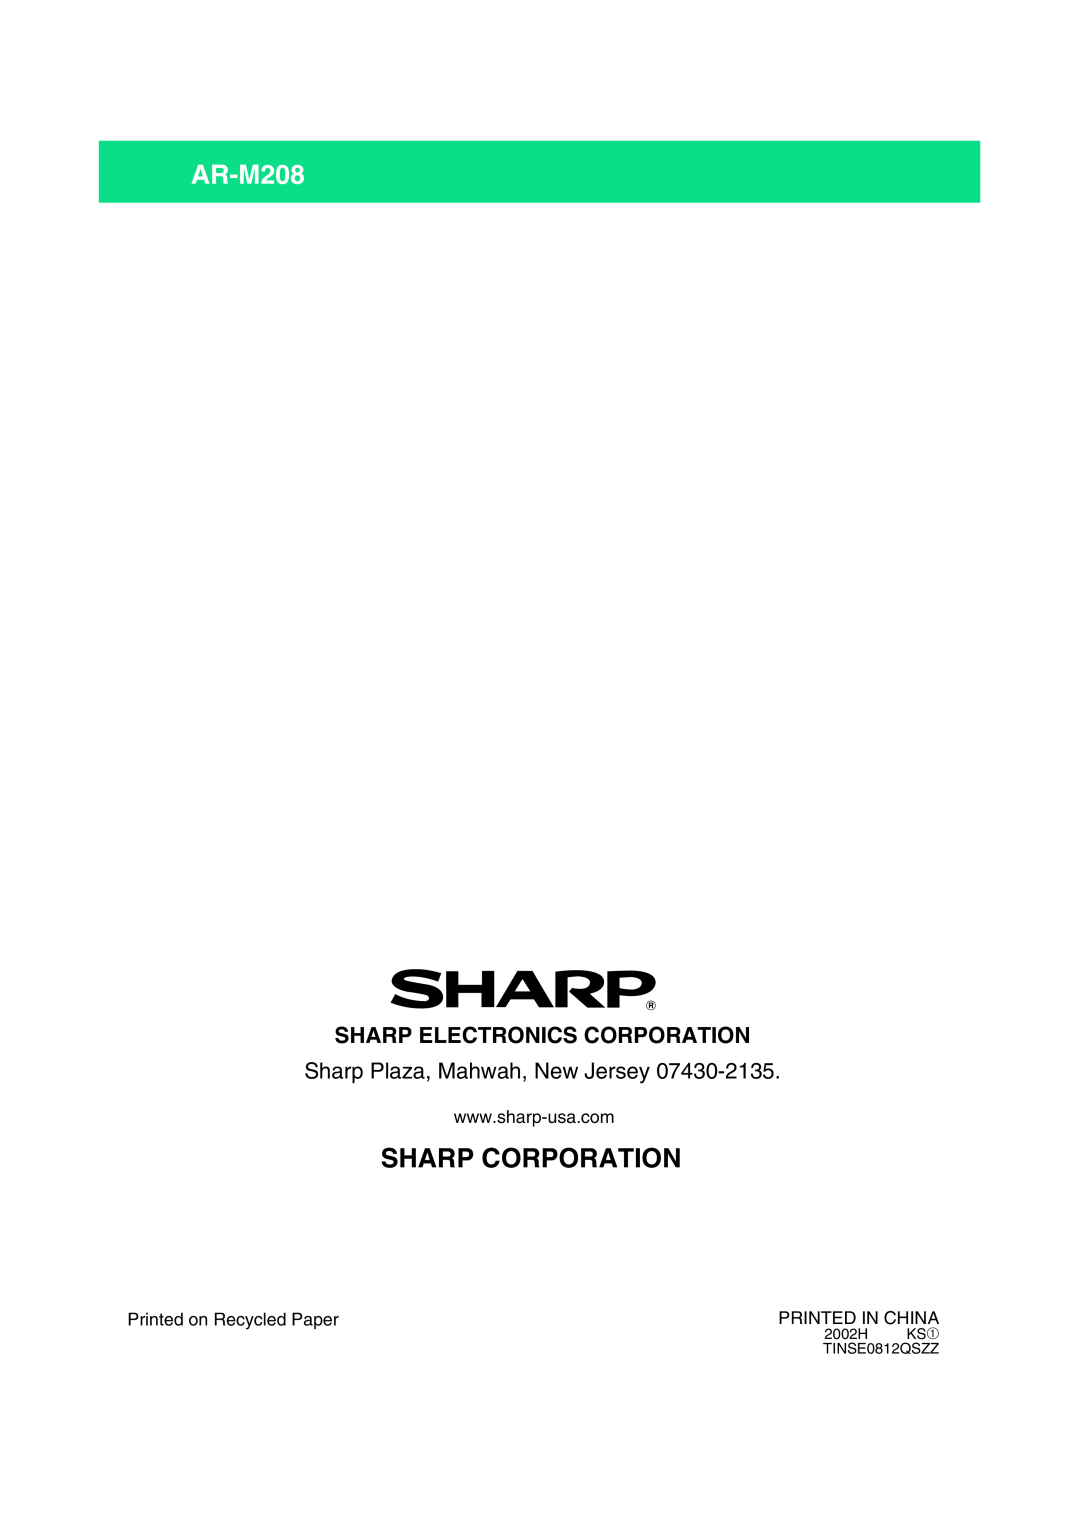 Sharp AR-M208 operation manual Sharp Electronics Corporation, Sharp Plaza, Mahwah, New Jersey, Sharp Corporation 